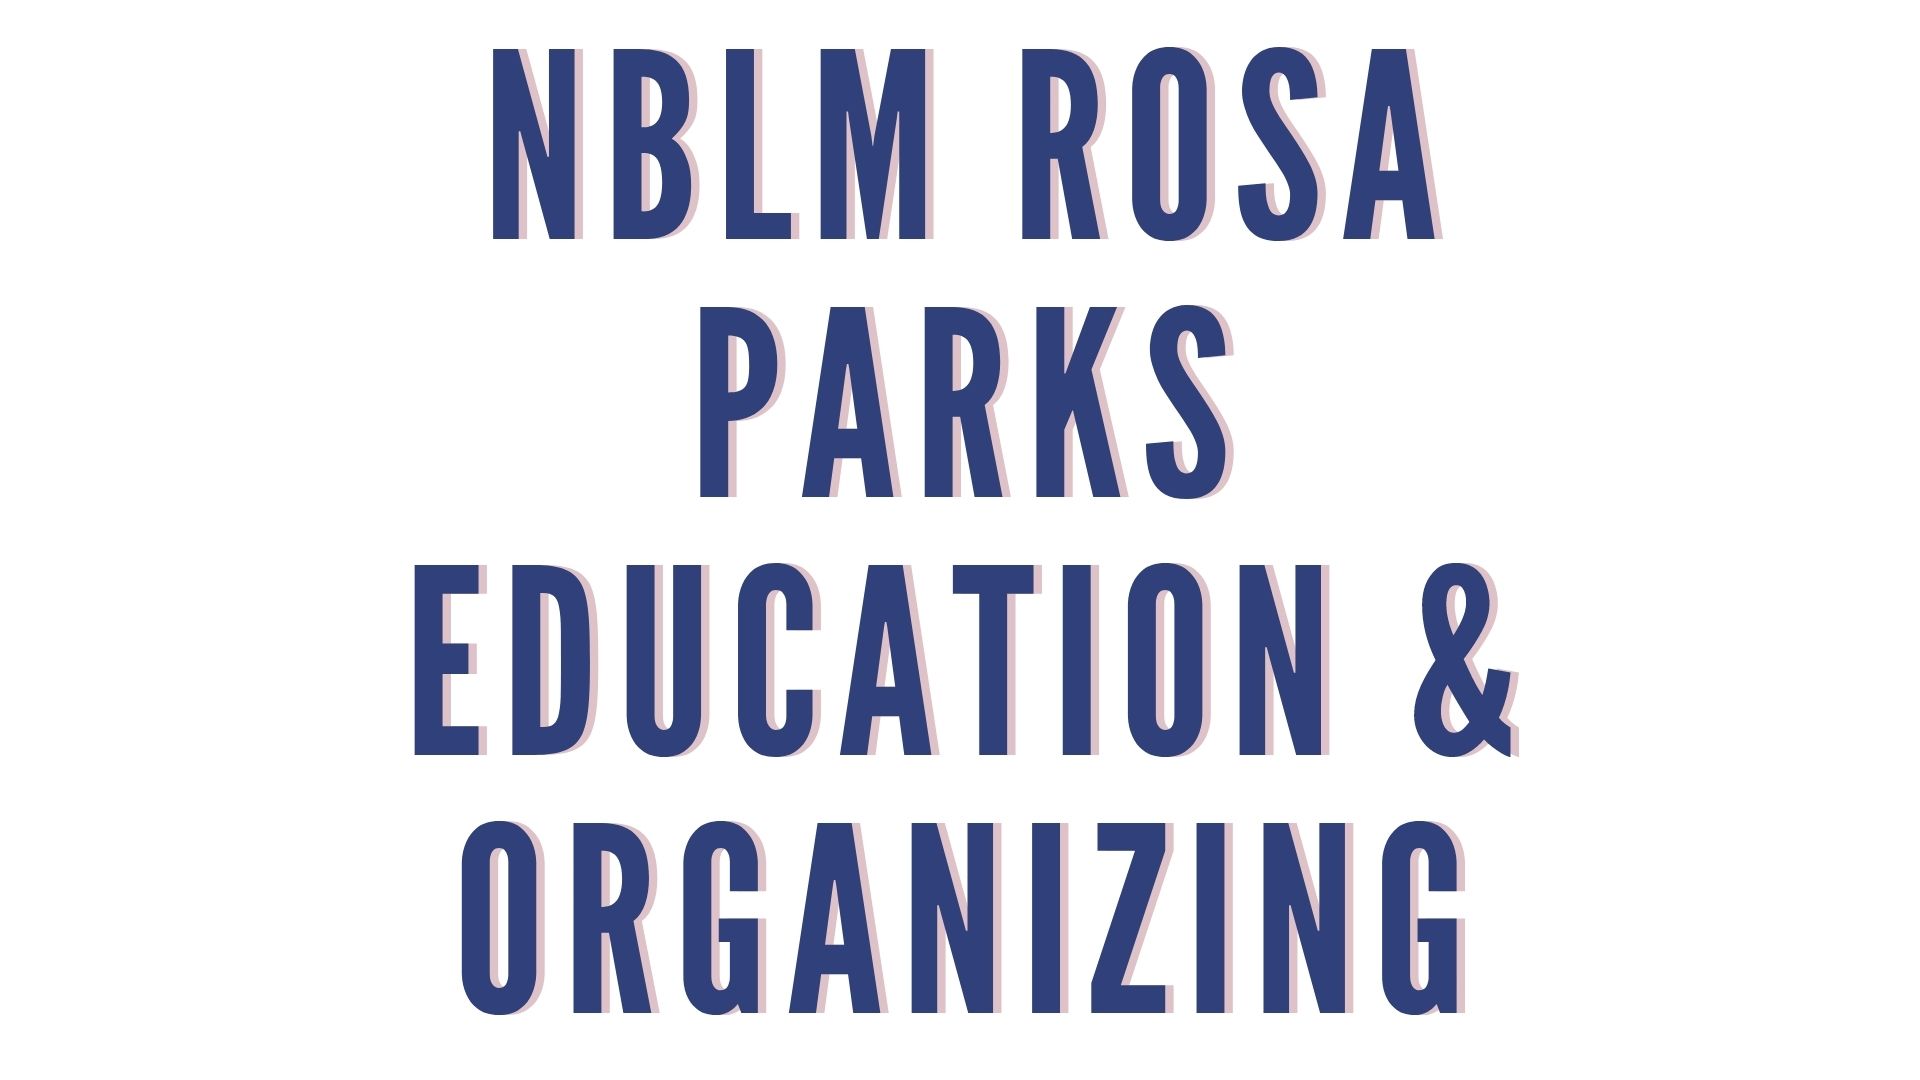 NBLM Rosa Parks Education & Organizing